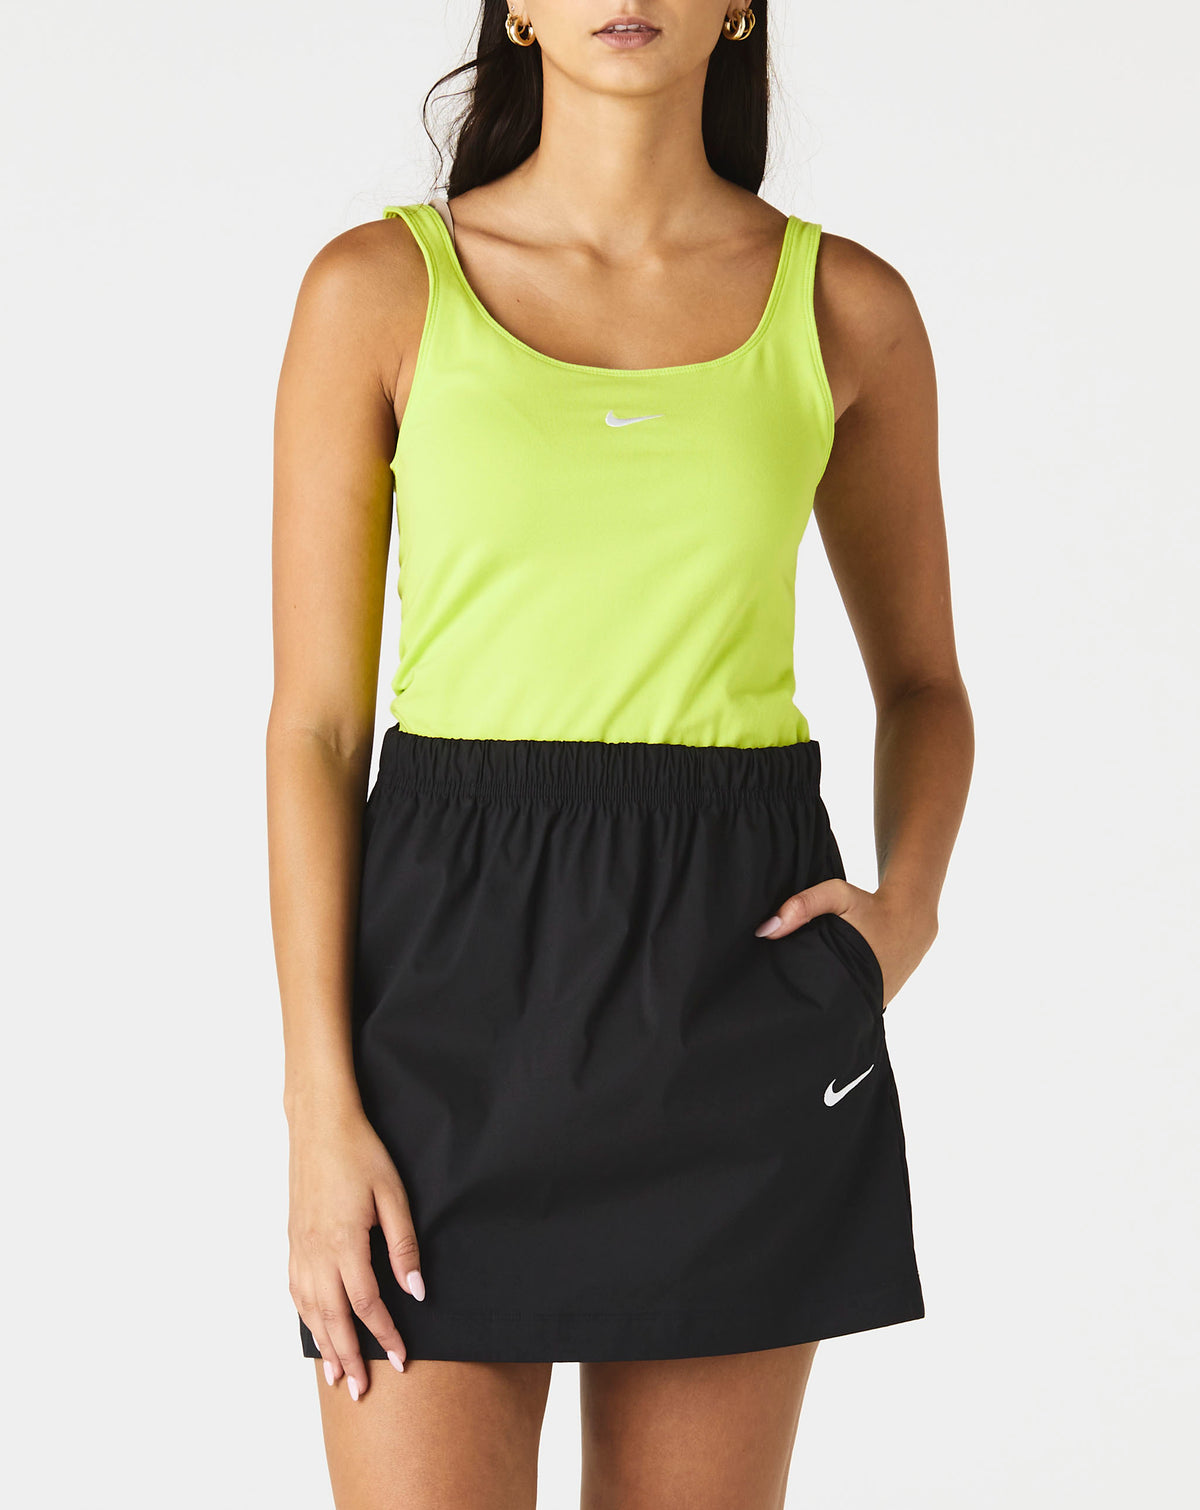 Nike Women's Essential Cami Tank - Rule of Next Apparel